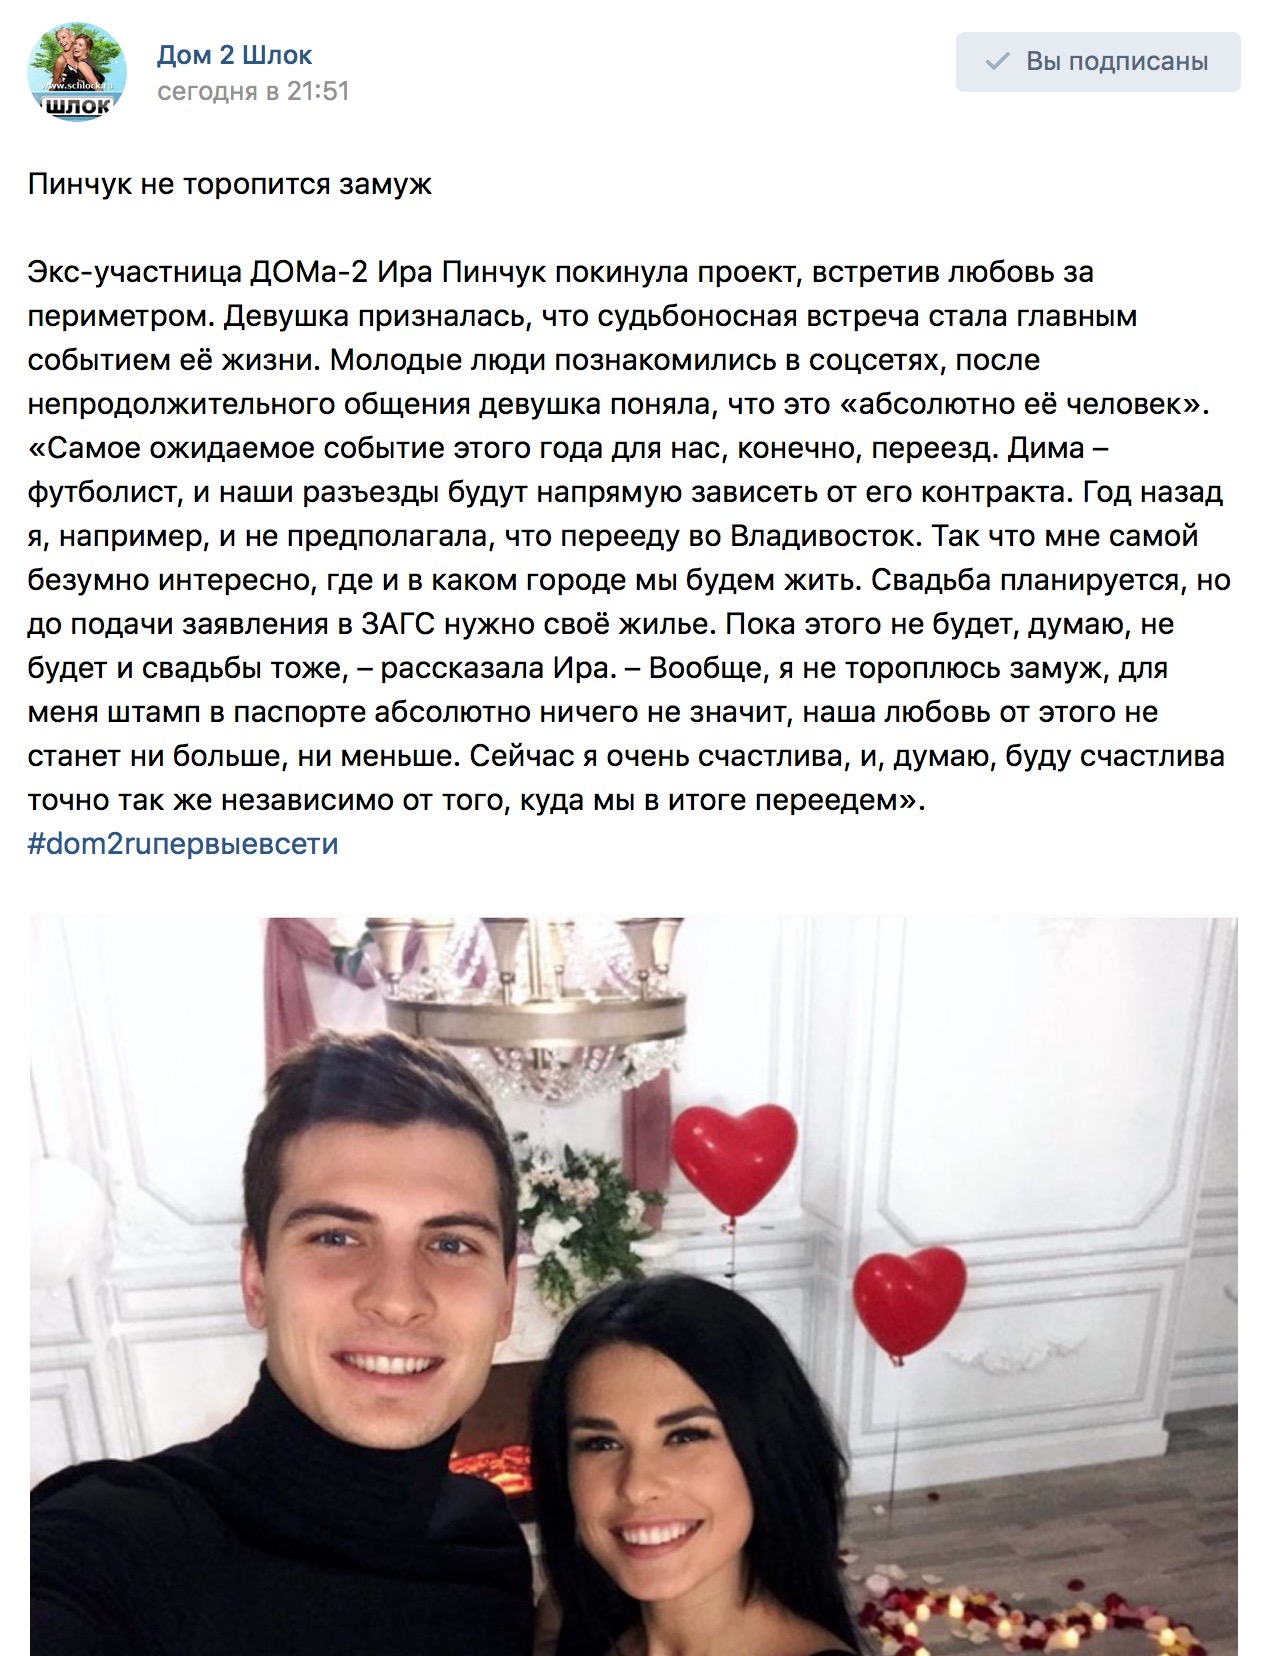 Ирина Пинчук и Дмитрий тихий